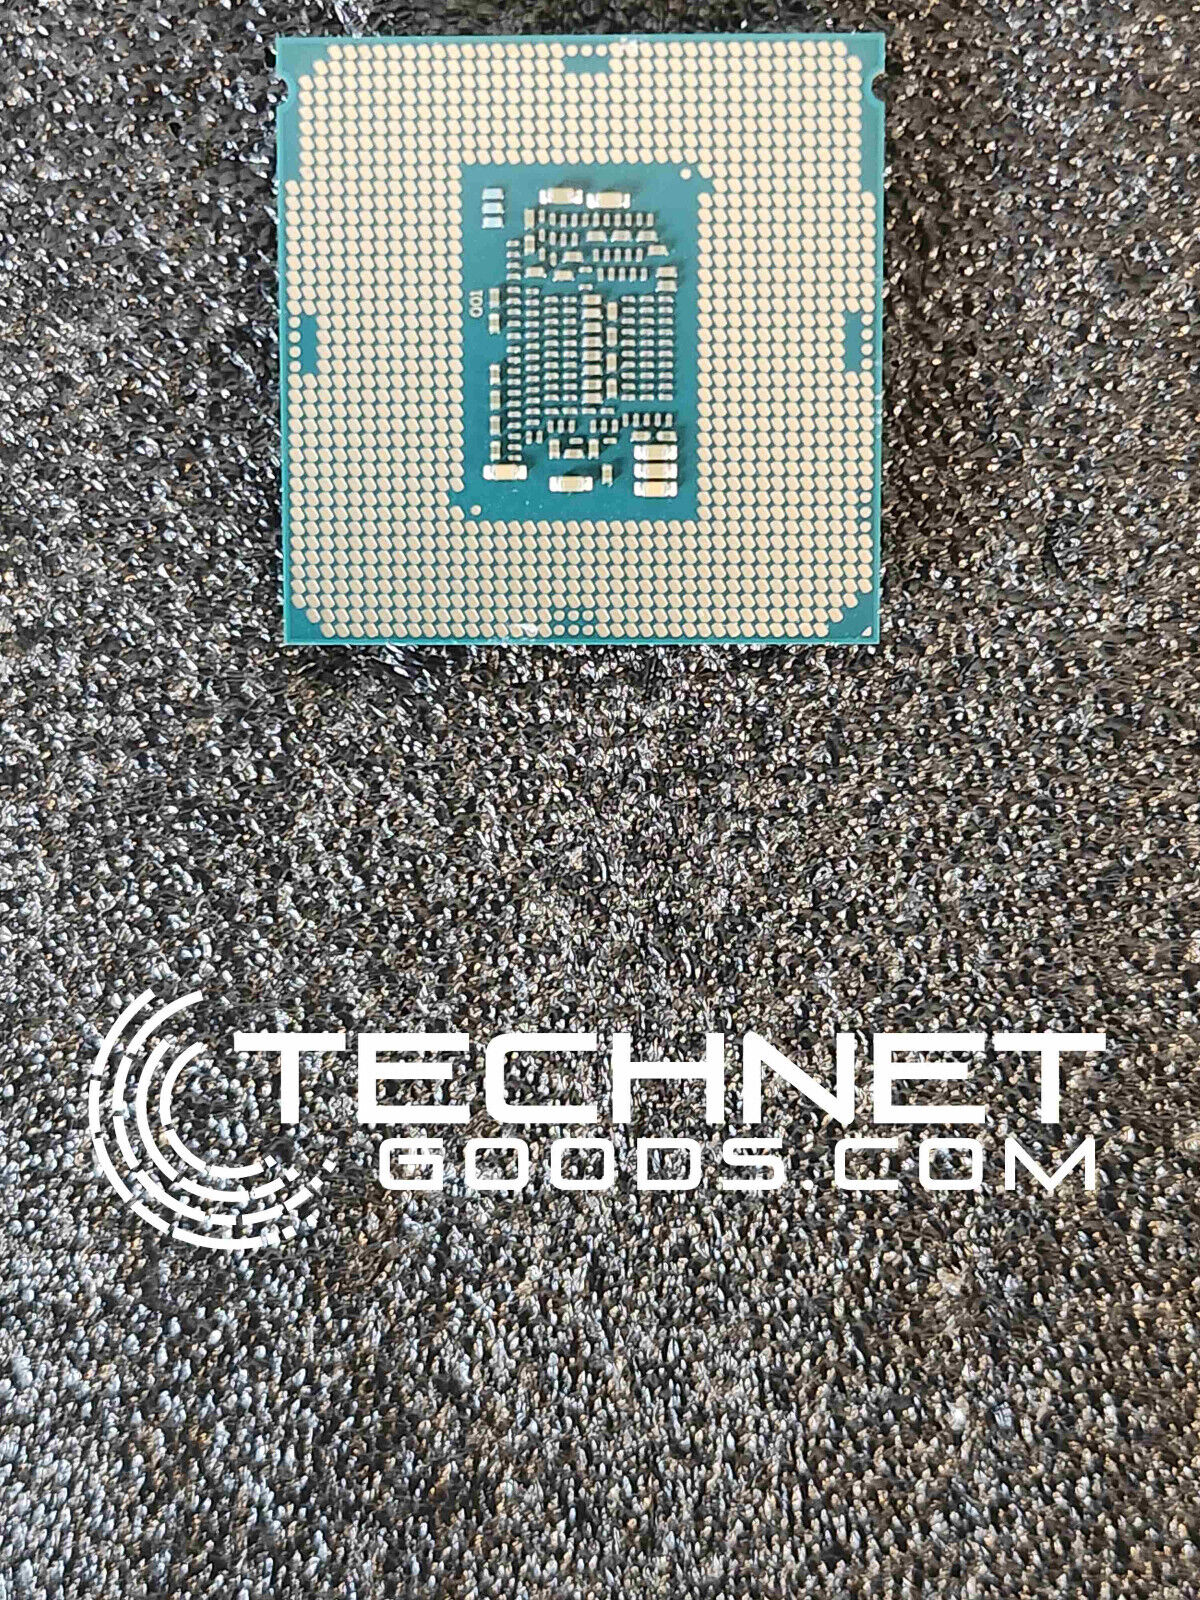 Intel Core i7-7700K 4.2GHz (4.5GHz TURBO) LGA 1151 Processor (SR33A) - TESTED